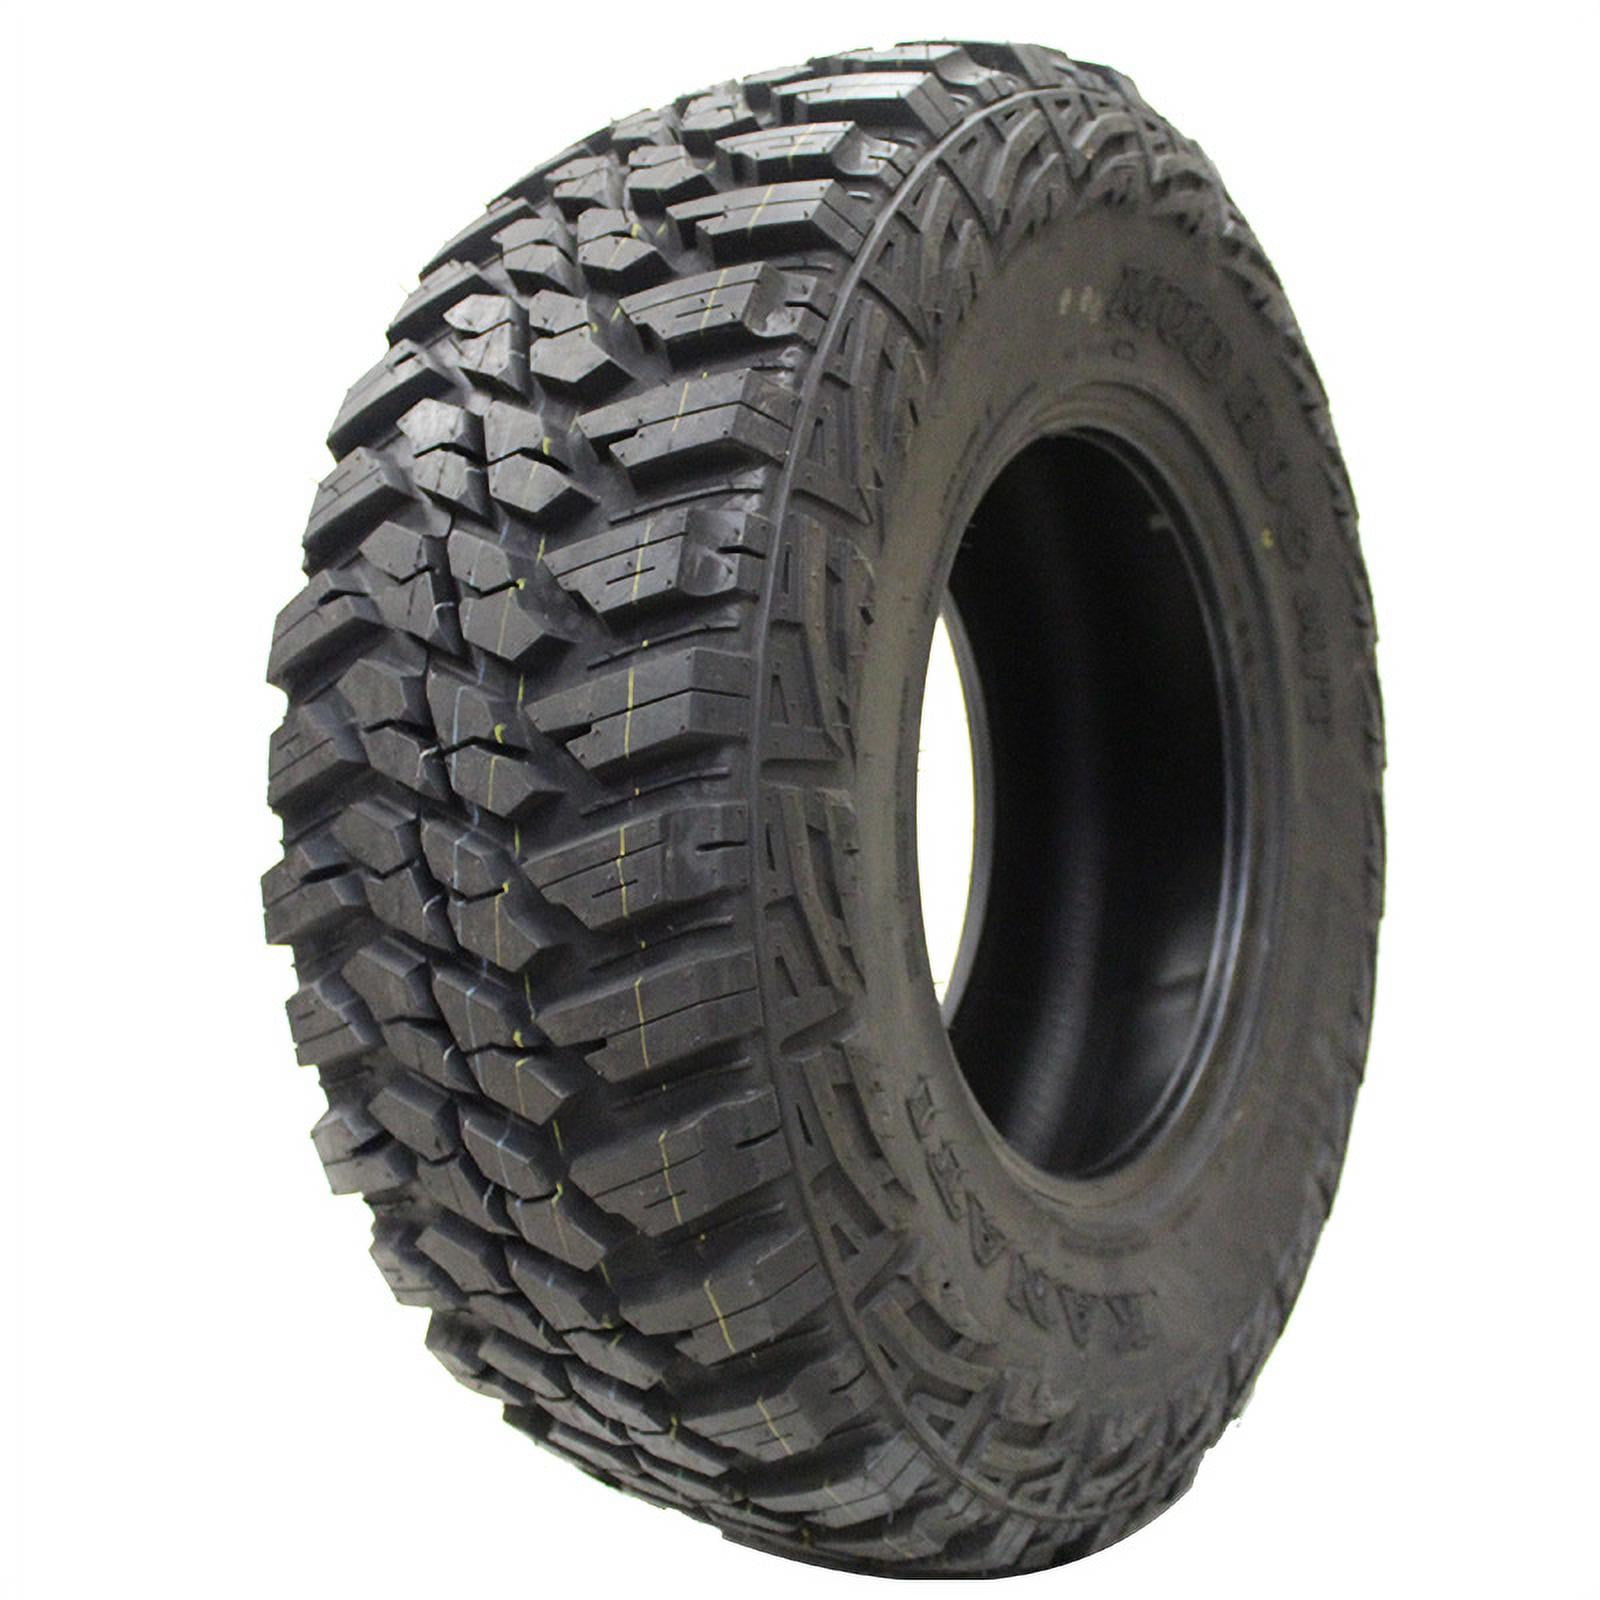 Kanati Mud Hog 315/70R17 121 Q Mud Terrain Tire 